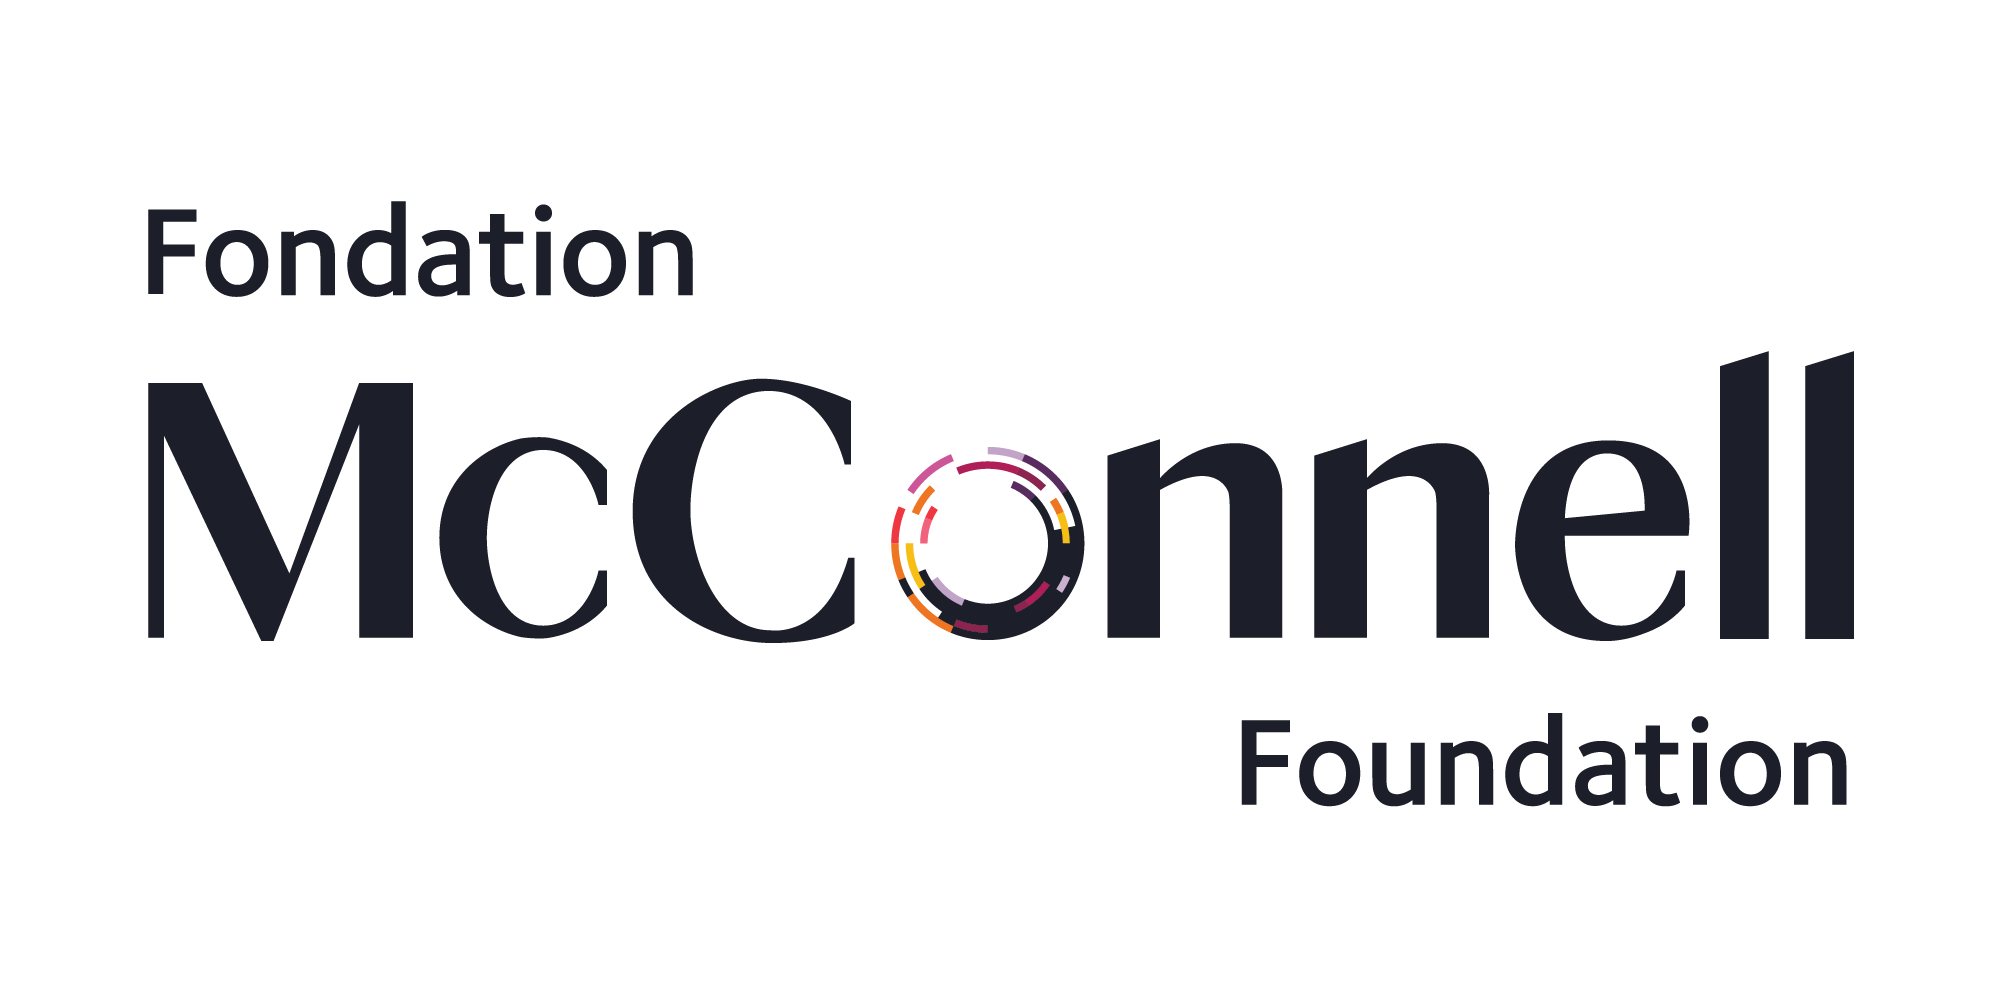 Fondation McConnell Foundation